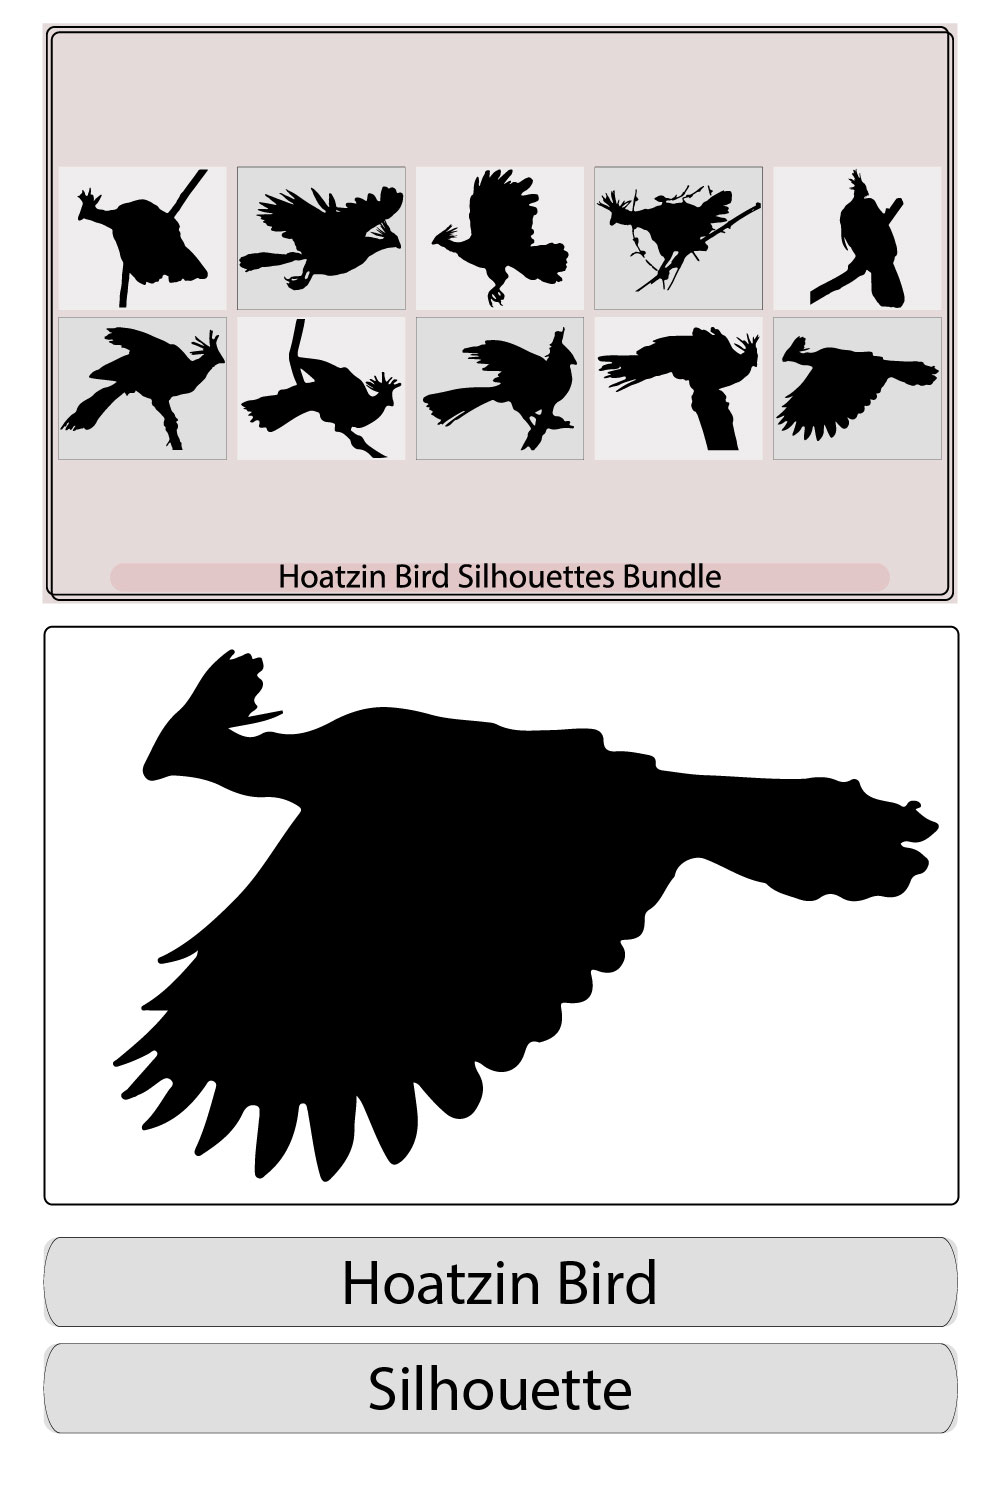 Hoatzin bird black silhouette vector,Cigana bird in profile view,Hoatzin bird Opisthocomus hoazin, Silhouetted pinterest preview image.